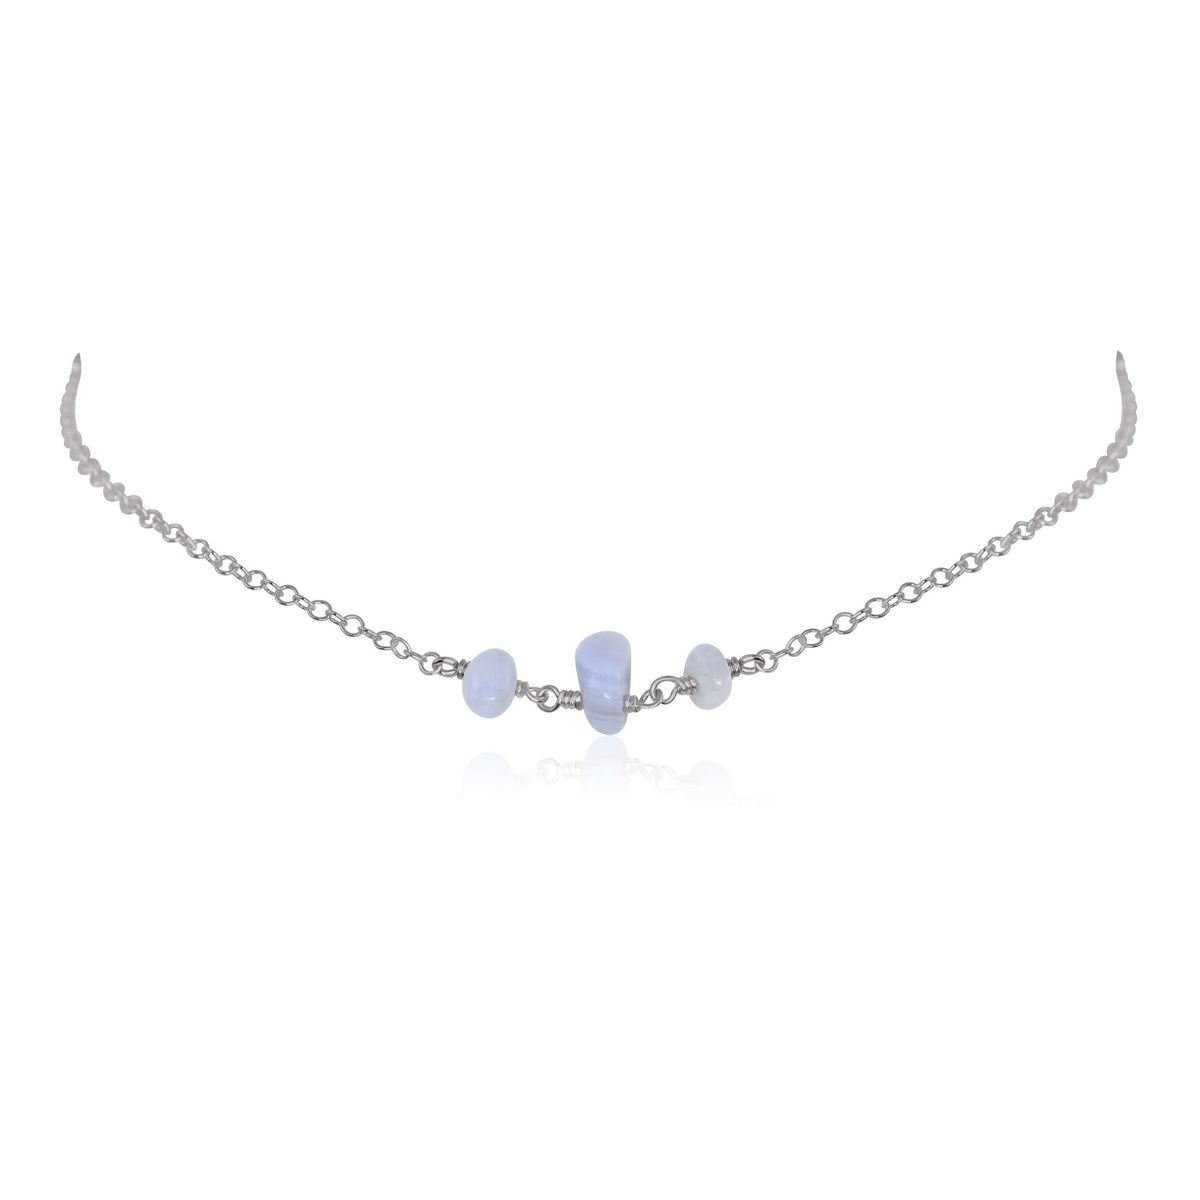 Beaded Chain Choker - Blue Lace Agate - Stainless Steel - Luna Tide Handmade Jewellery